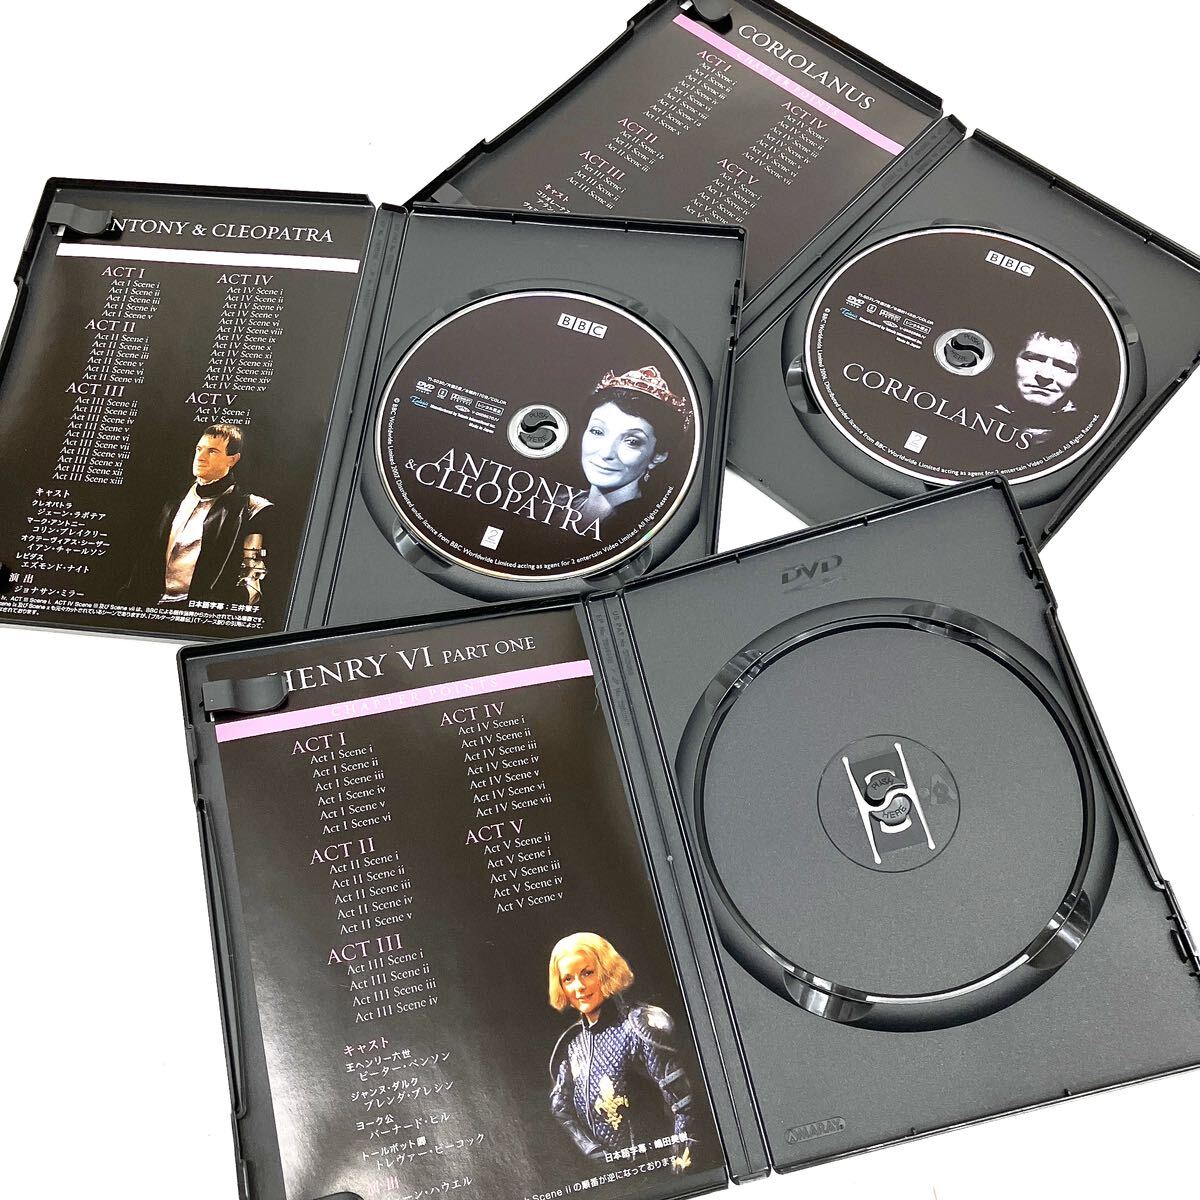 BBC shake s Piaa коллекция DVD все 37 листов комплект BOX THE SHAKESPEARE COLLECTION shake s Piaa полное собрание сочинений нераспечатанный товар содержит alp.0419